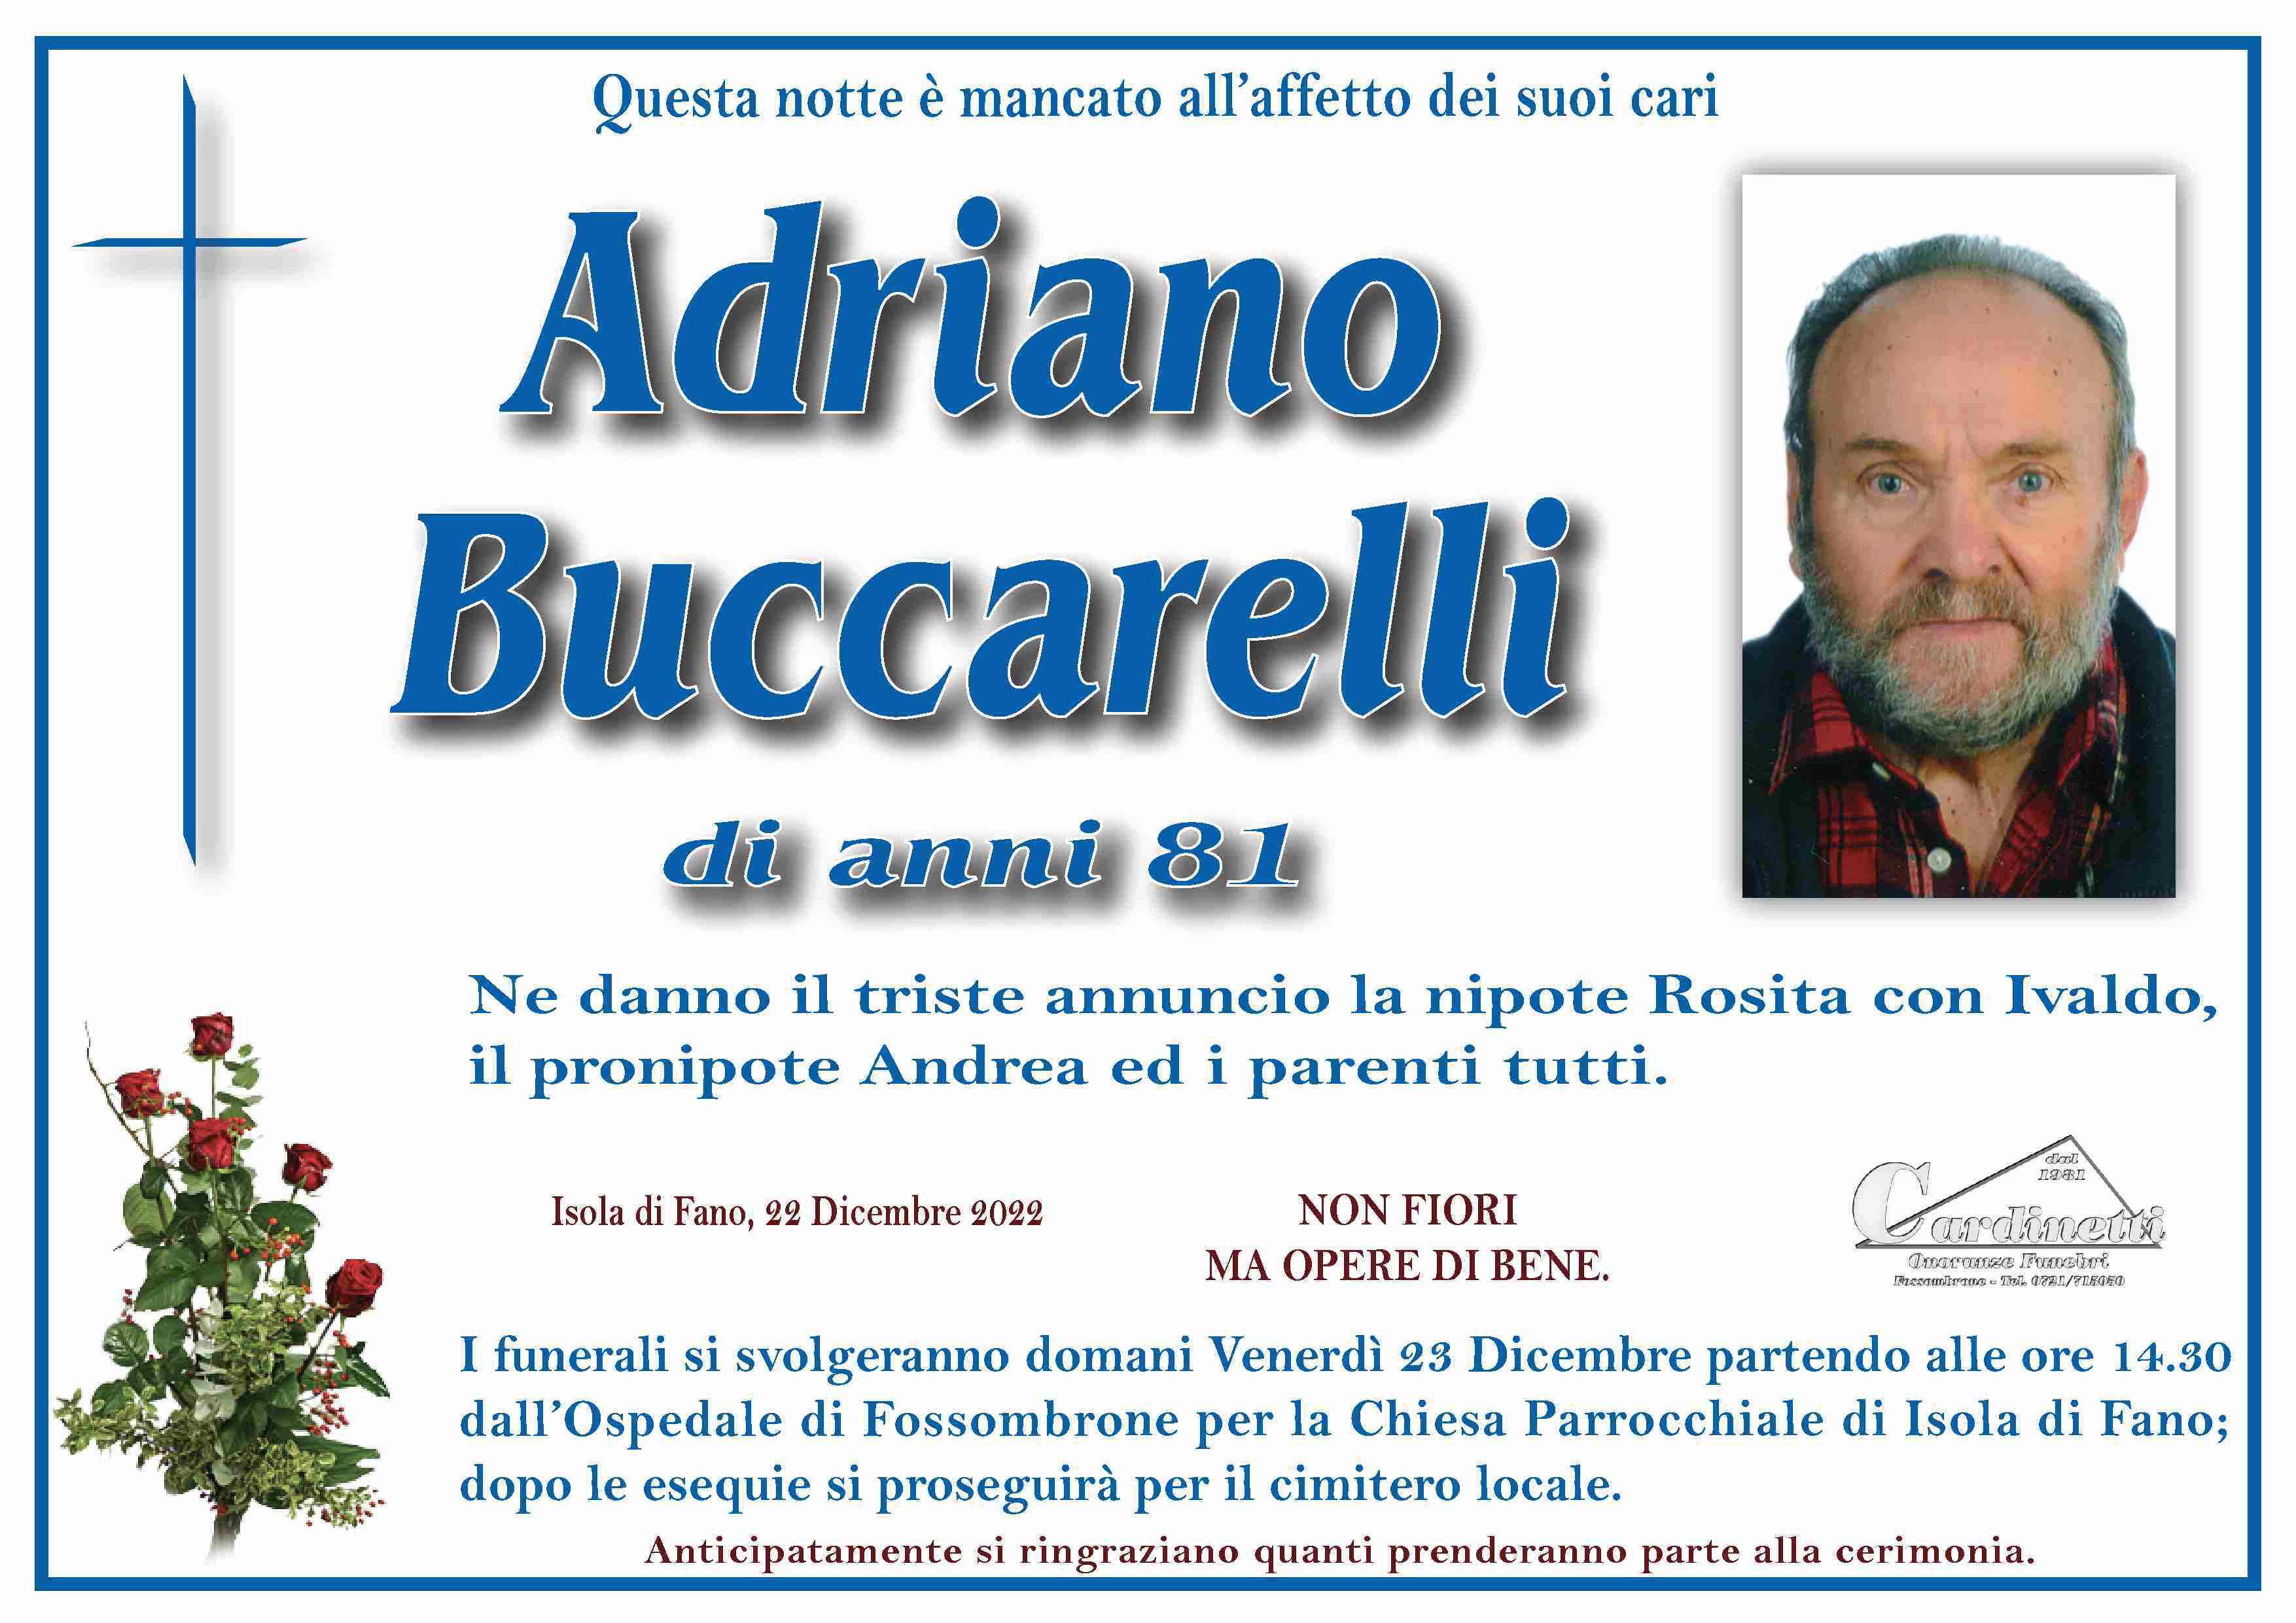 Adriano Buccarelli